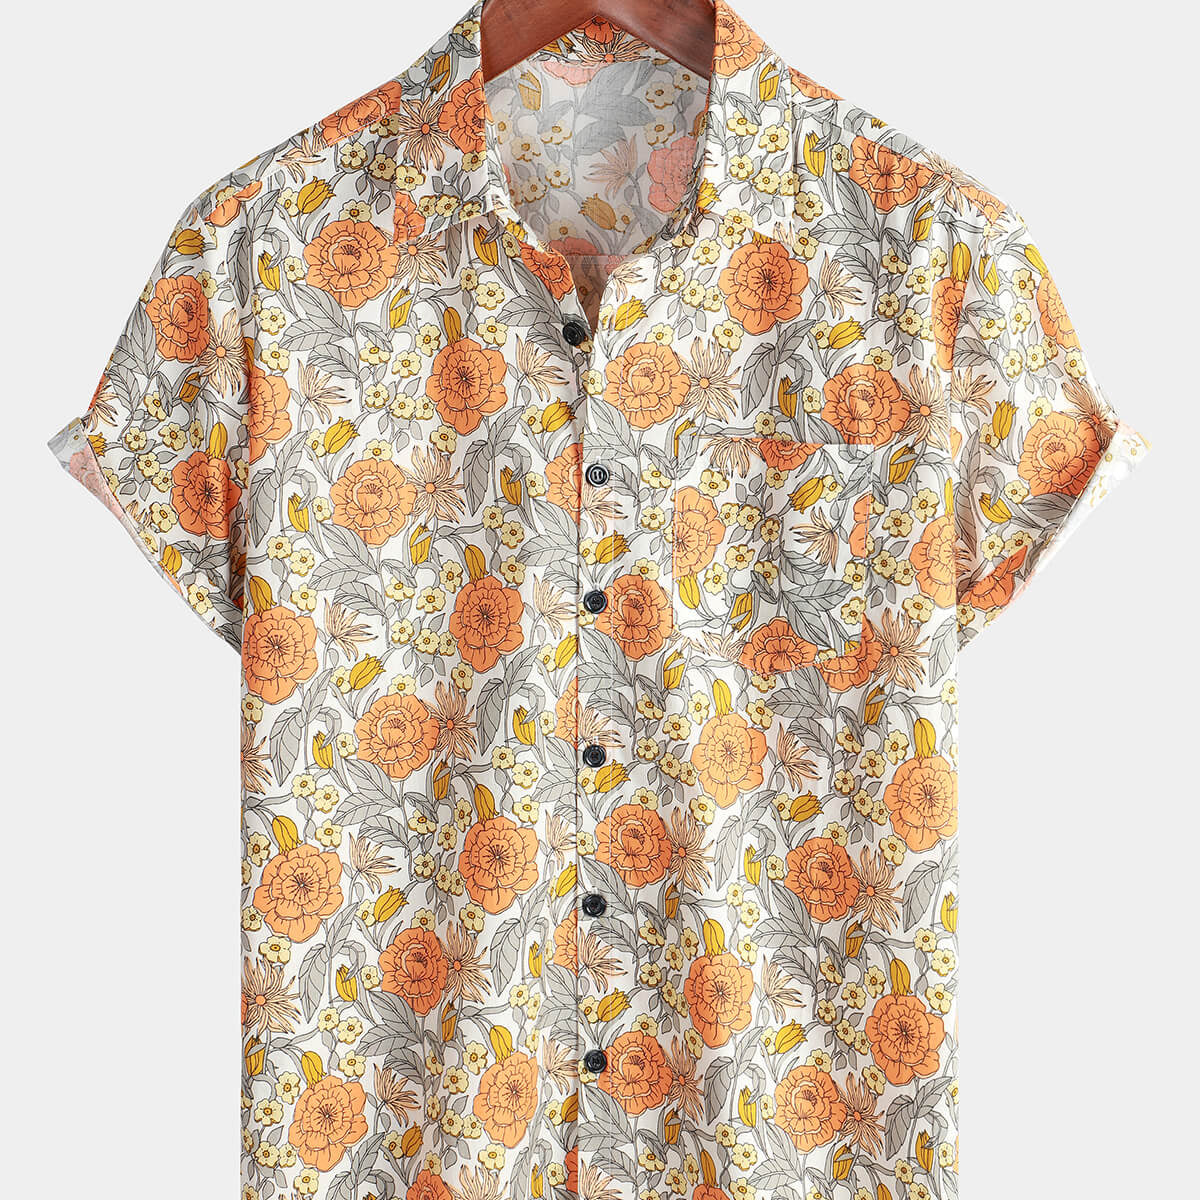 Men's Rose Floral Short Sleeve Button Up Cotton Pocket Summer Shirt